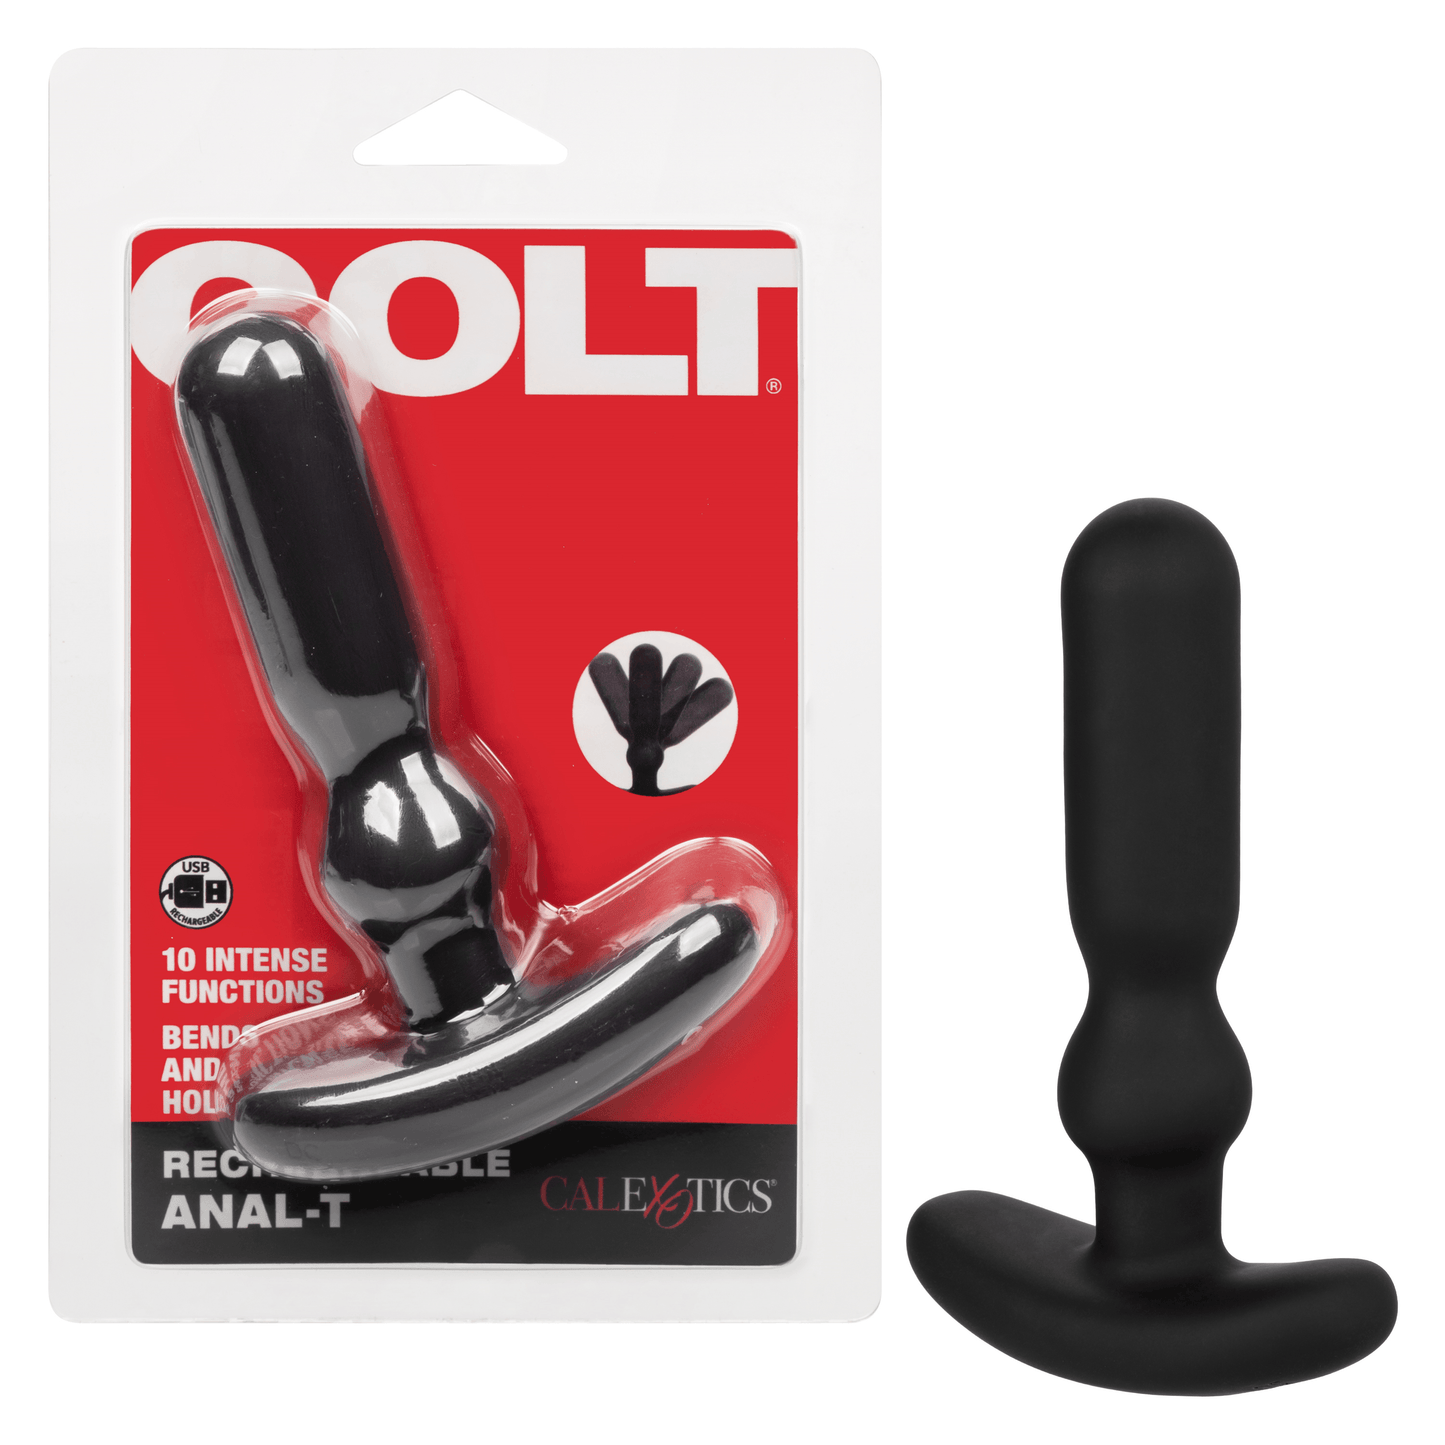 Colt Rechargeable Anal-T - Take A Peek